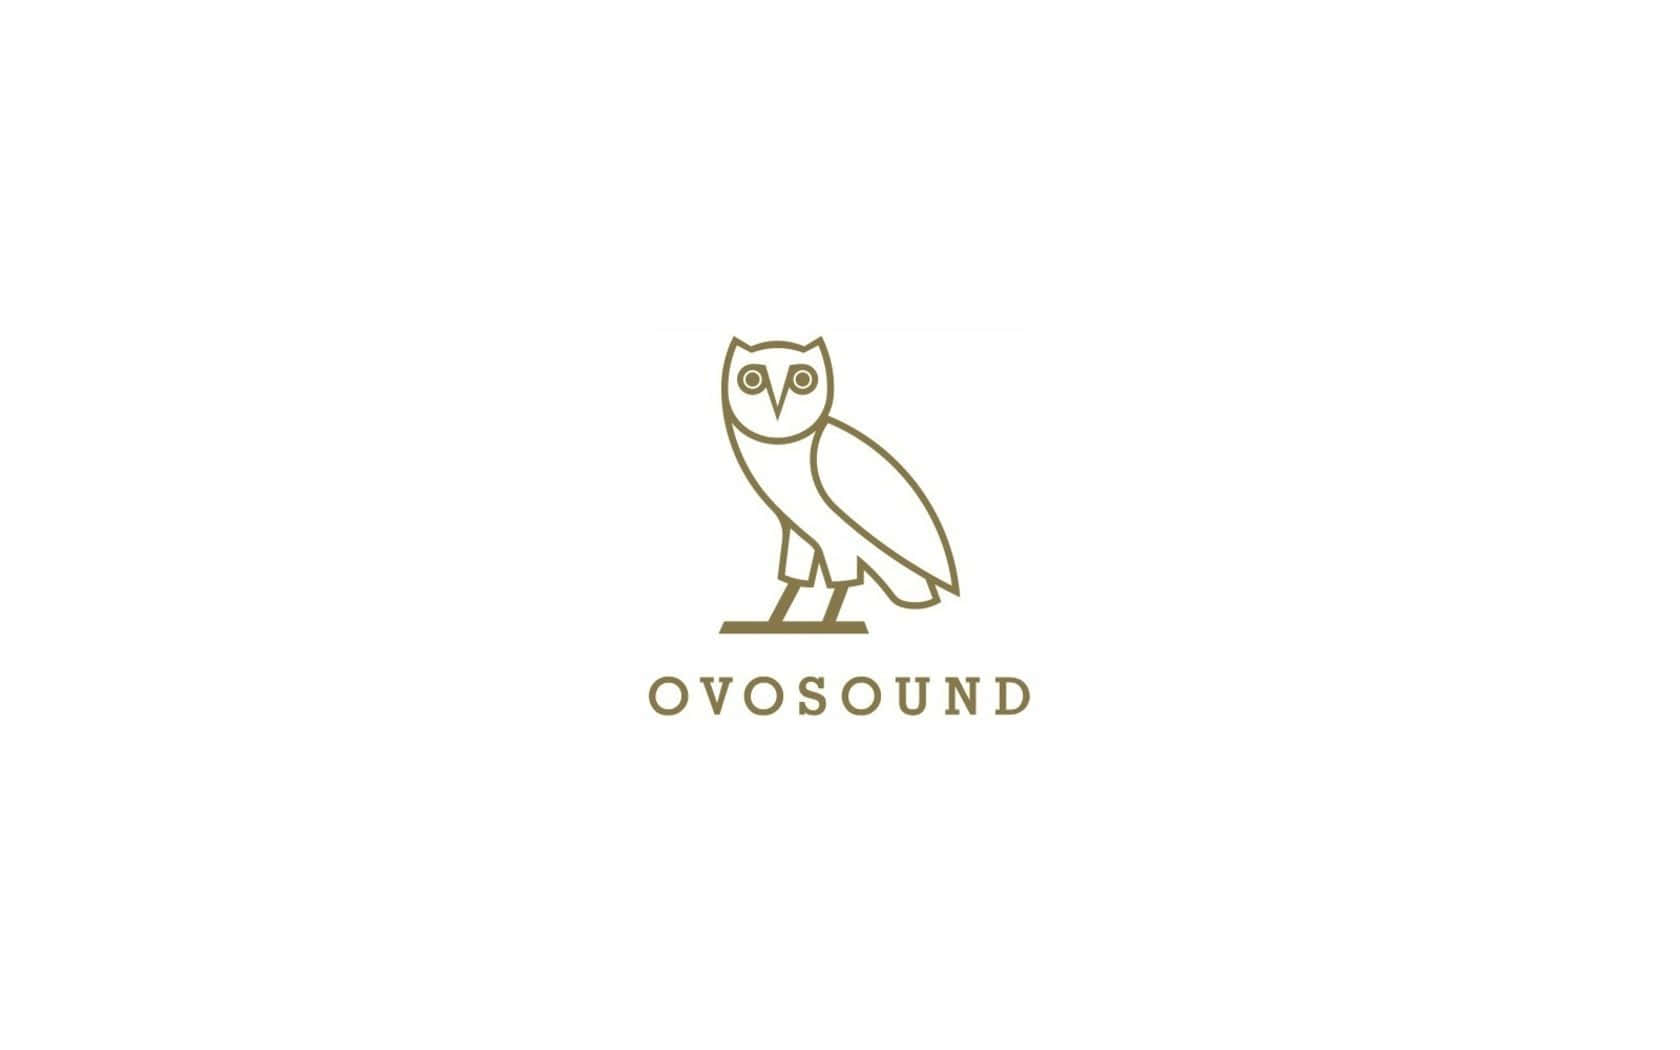 Oyosound Logo With An Owl On It Wallpaper